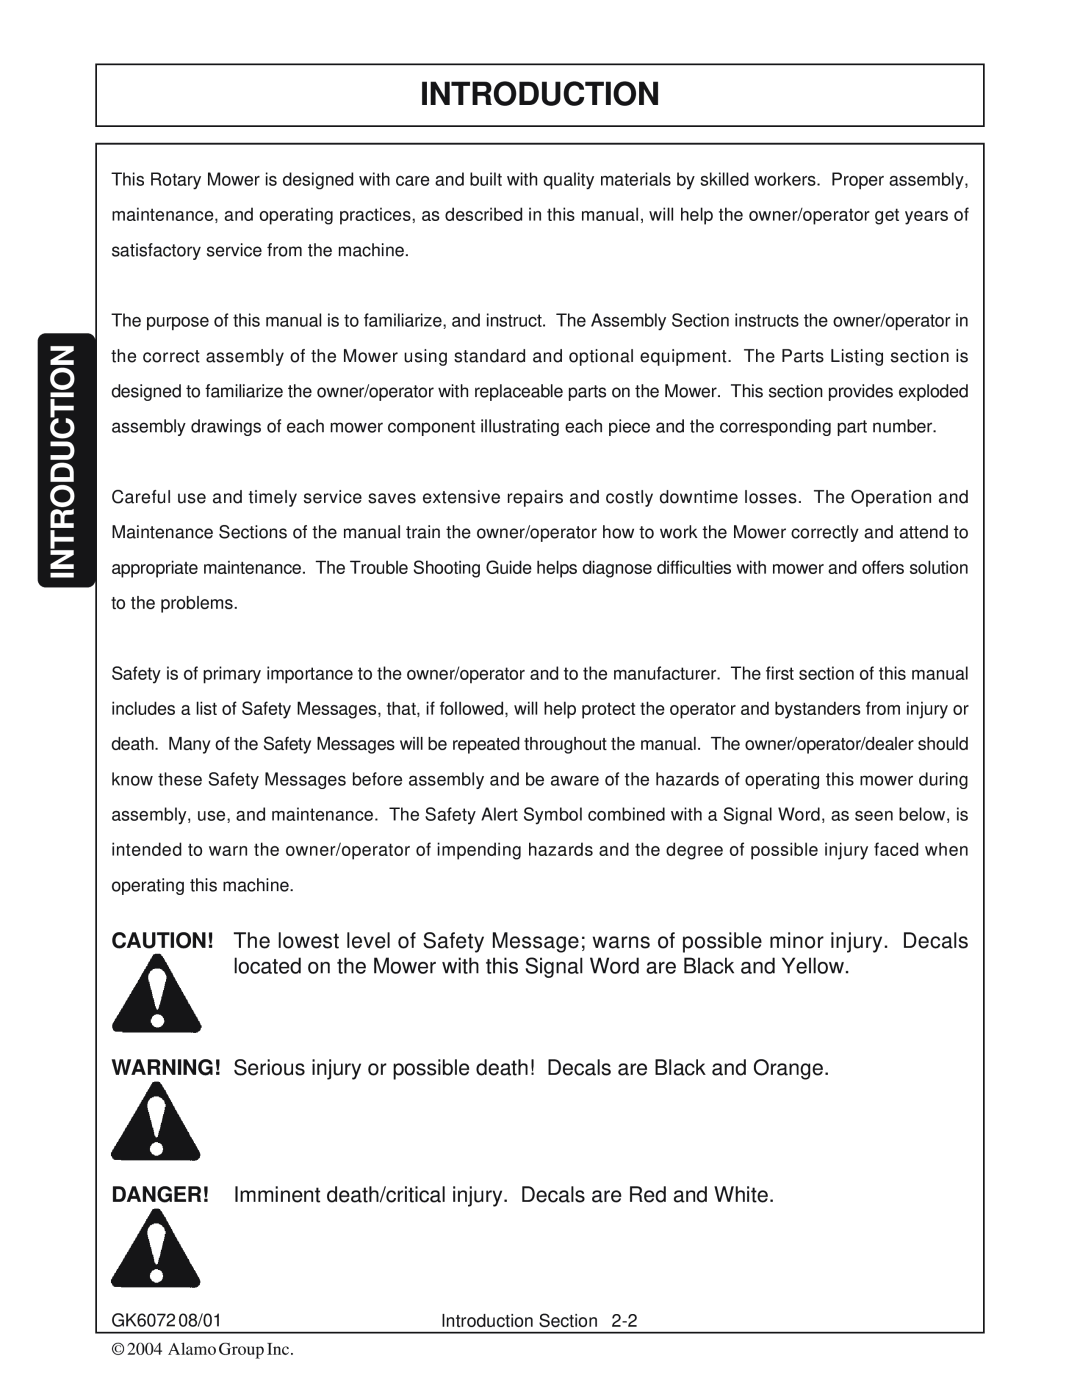 Rhino Mounts GK6072 manual Introduction 